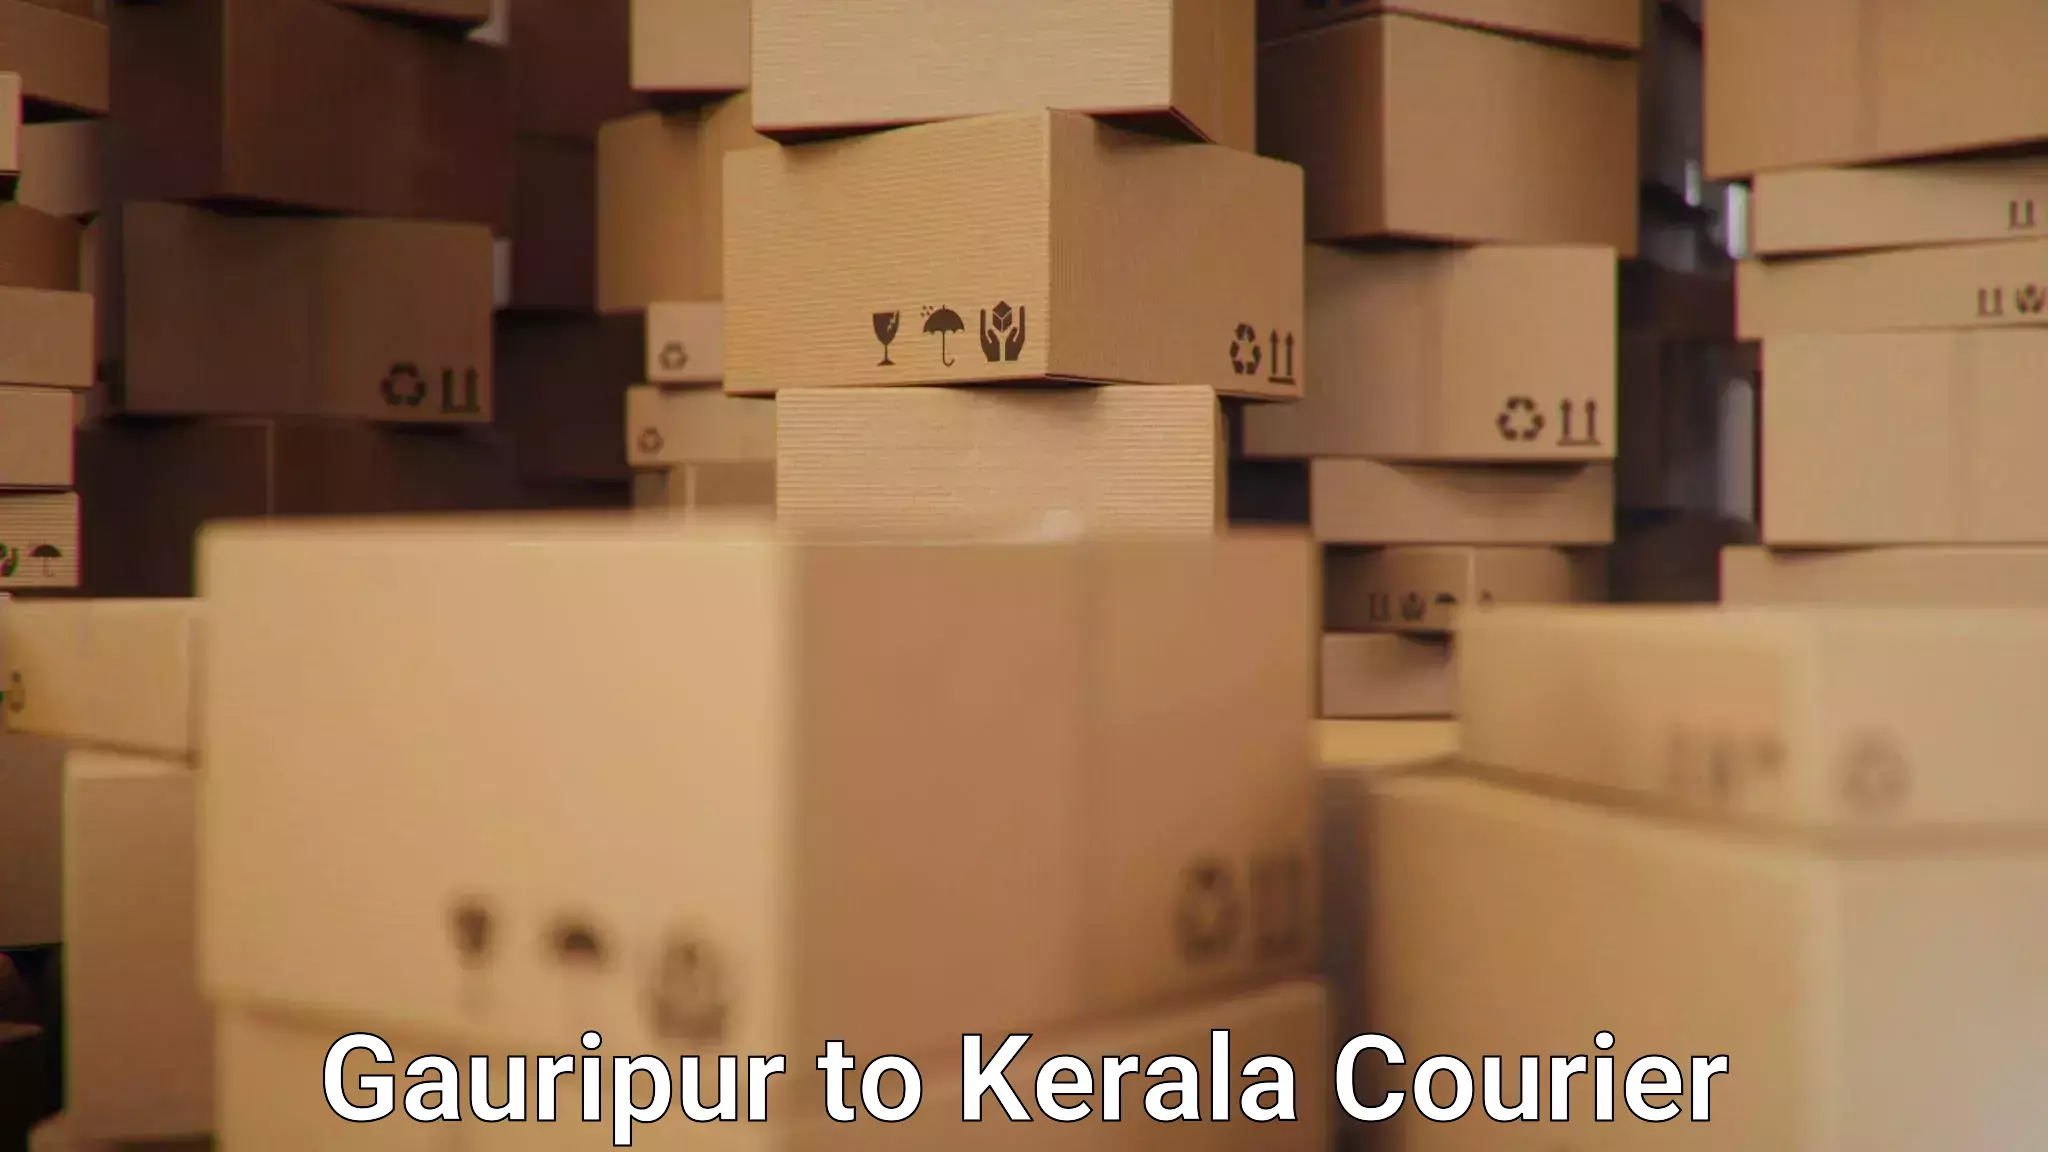 Digital shipping tools Gauripur to Kuchi